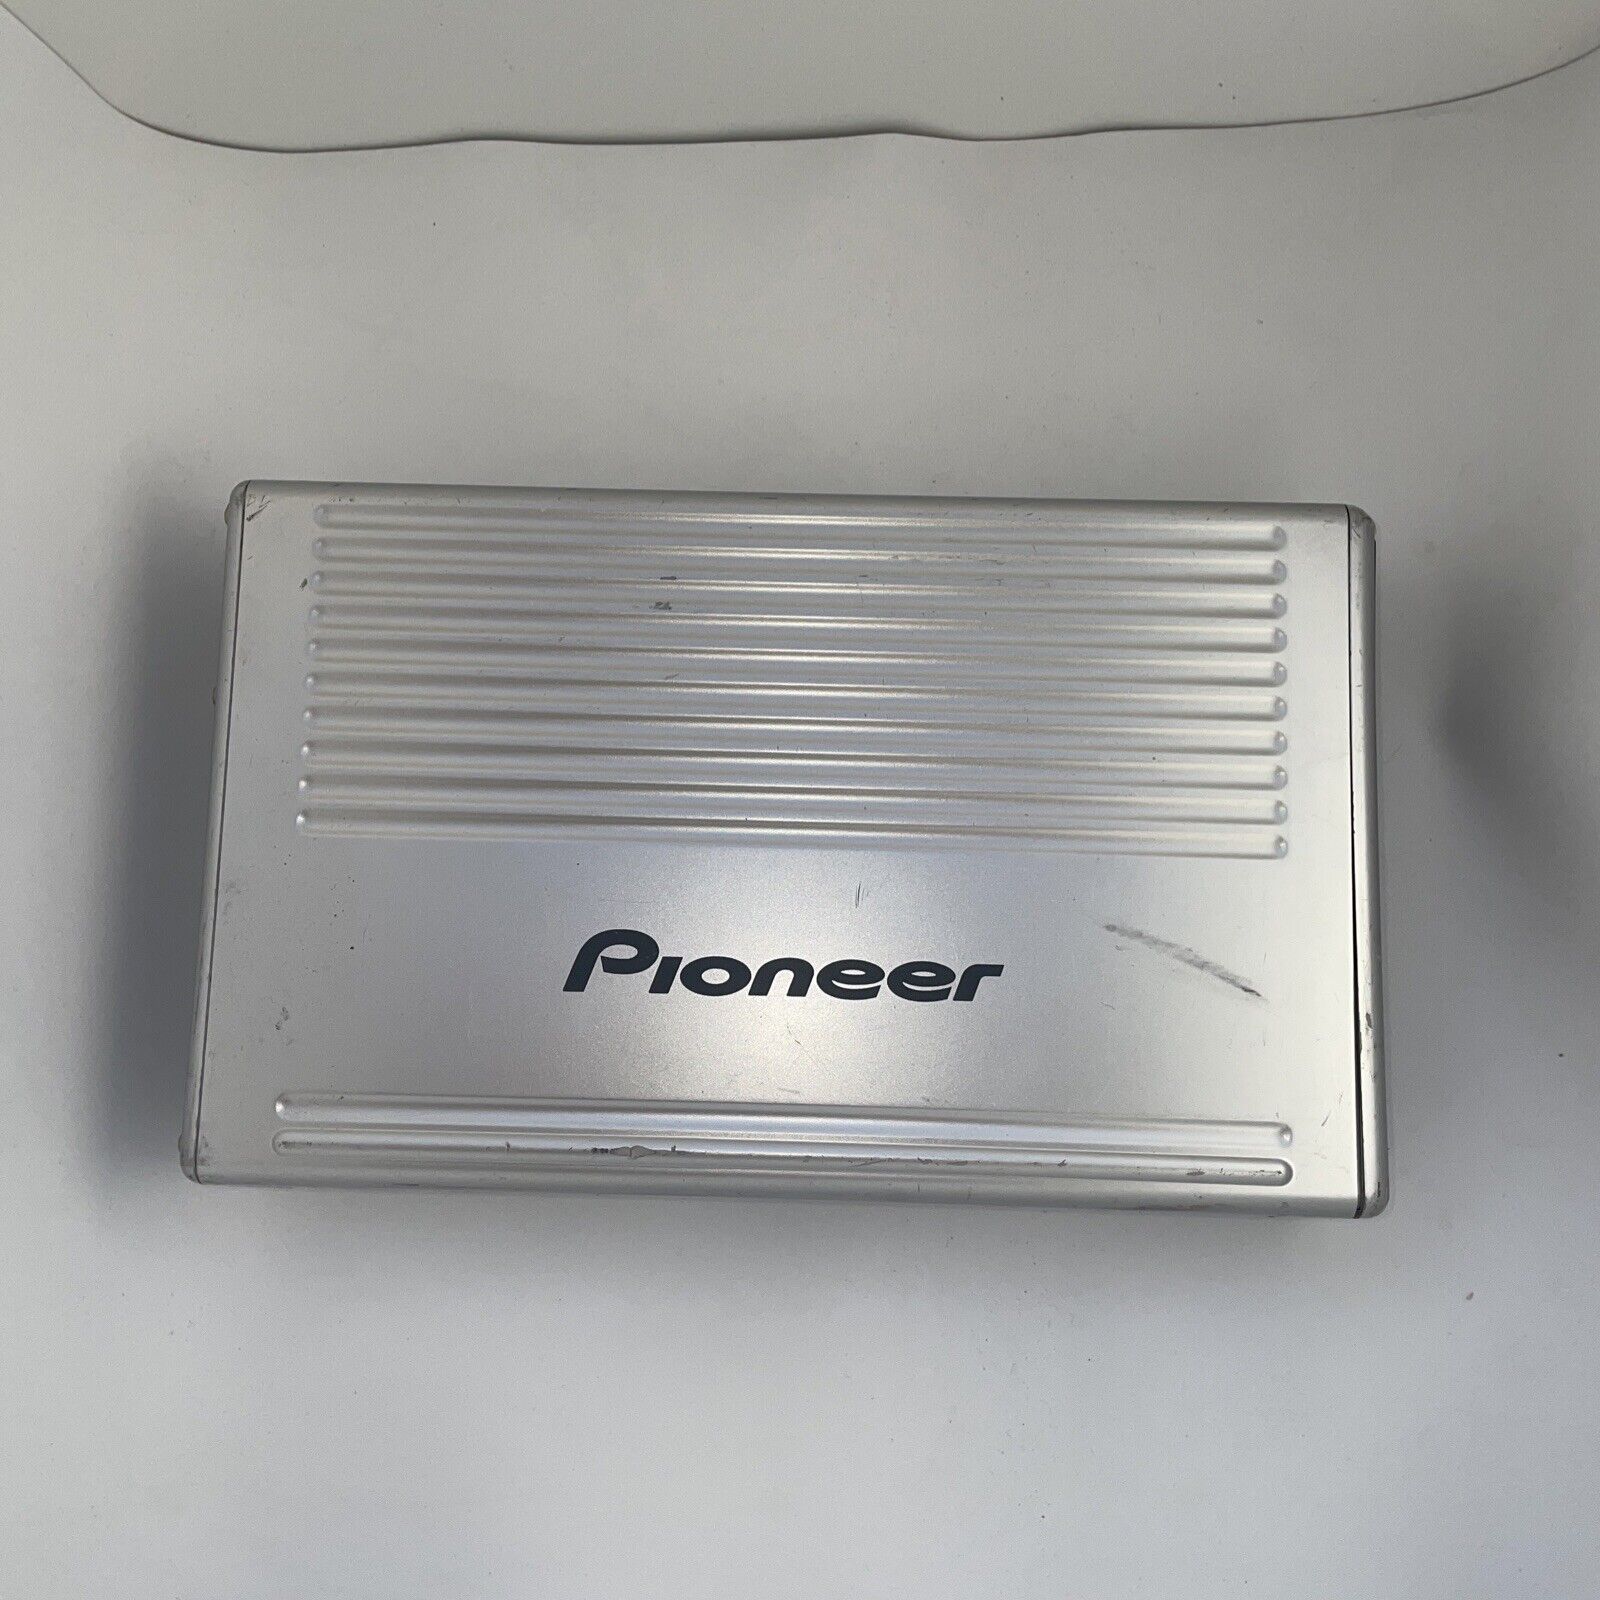 Pioneer DVR-S606 External DVD / CD Read Write Drive DVD±RW - Player Recorder.